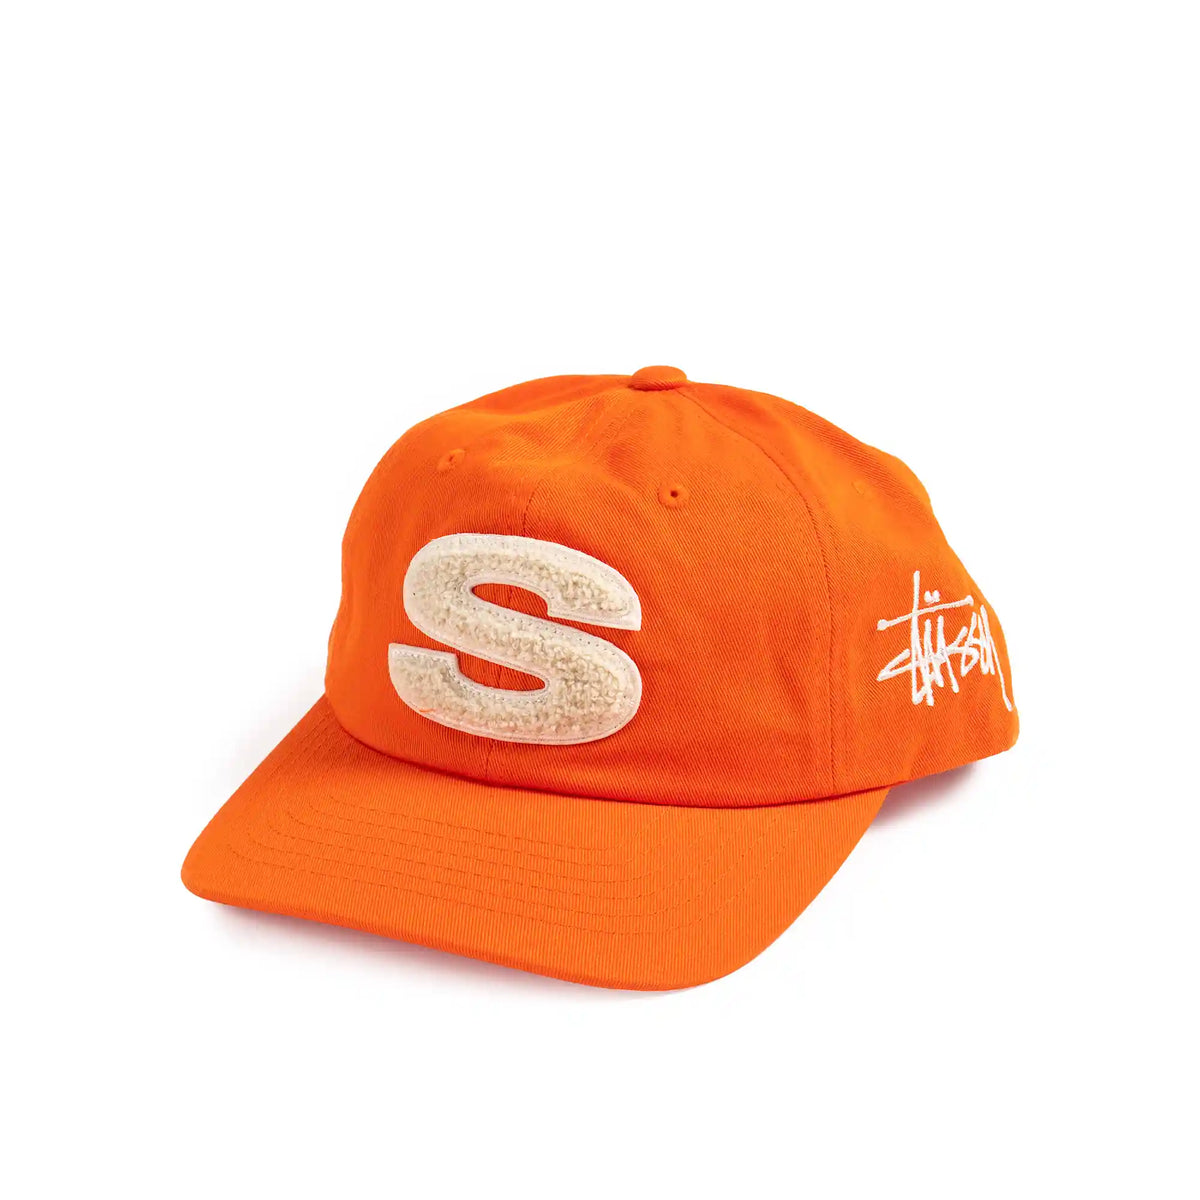 Stussy Chenille S Low Pro Cap, orange, 1311061-oran